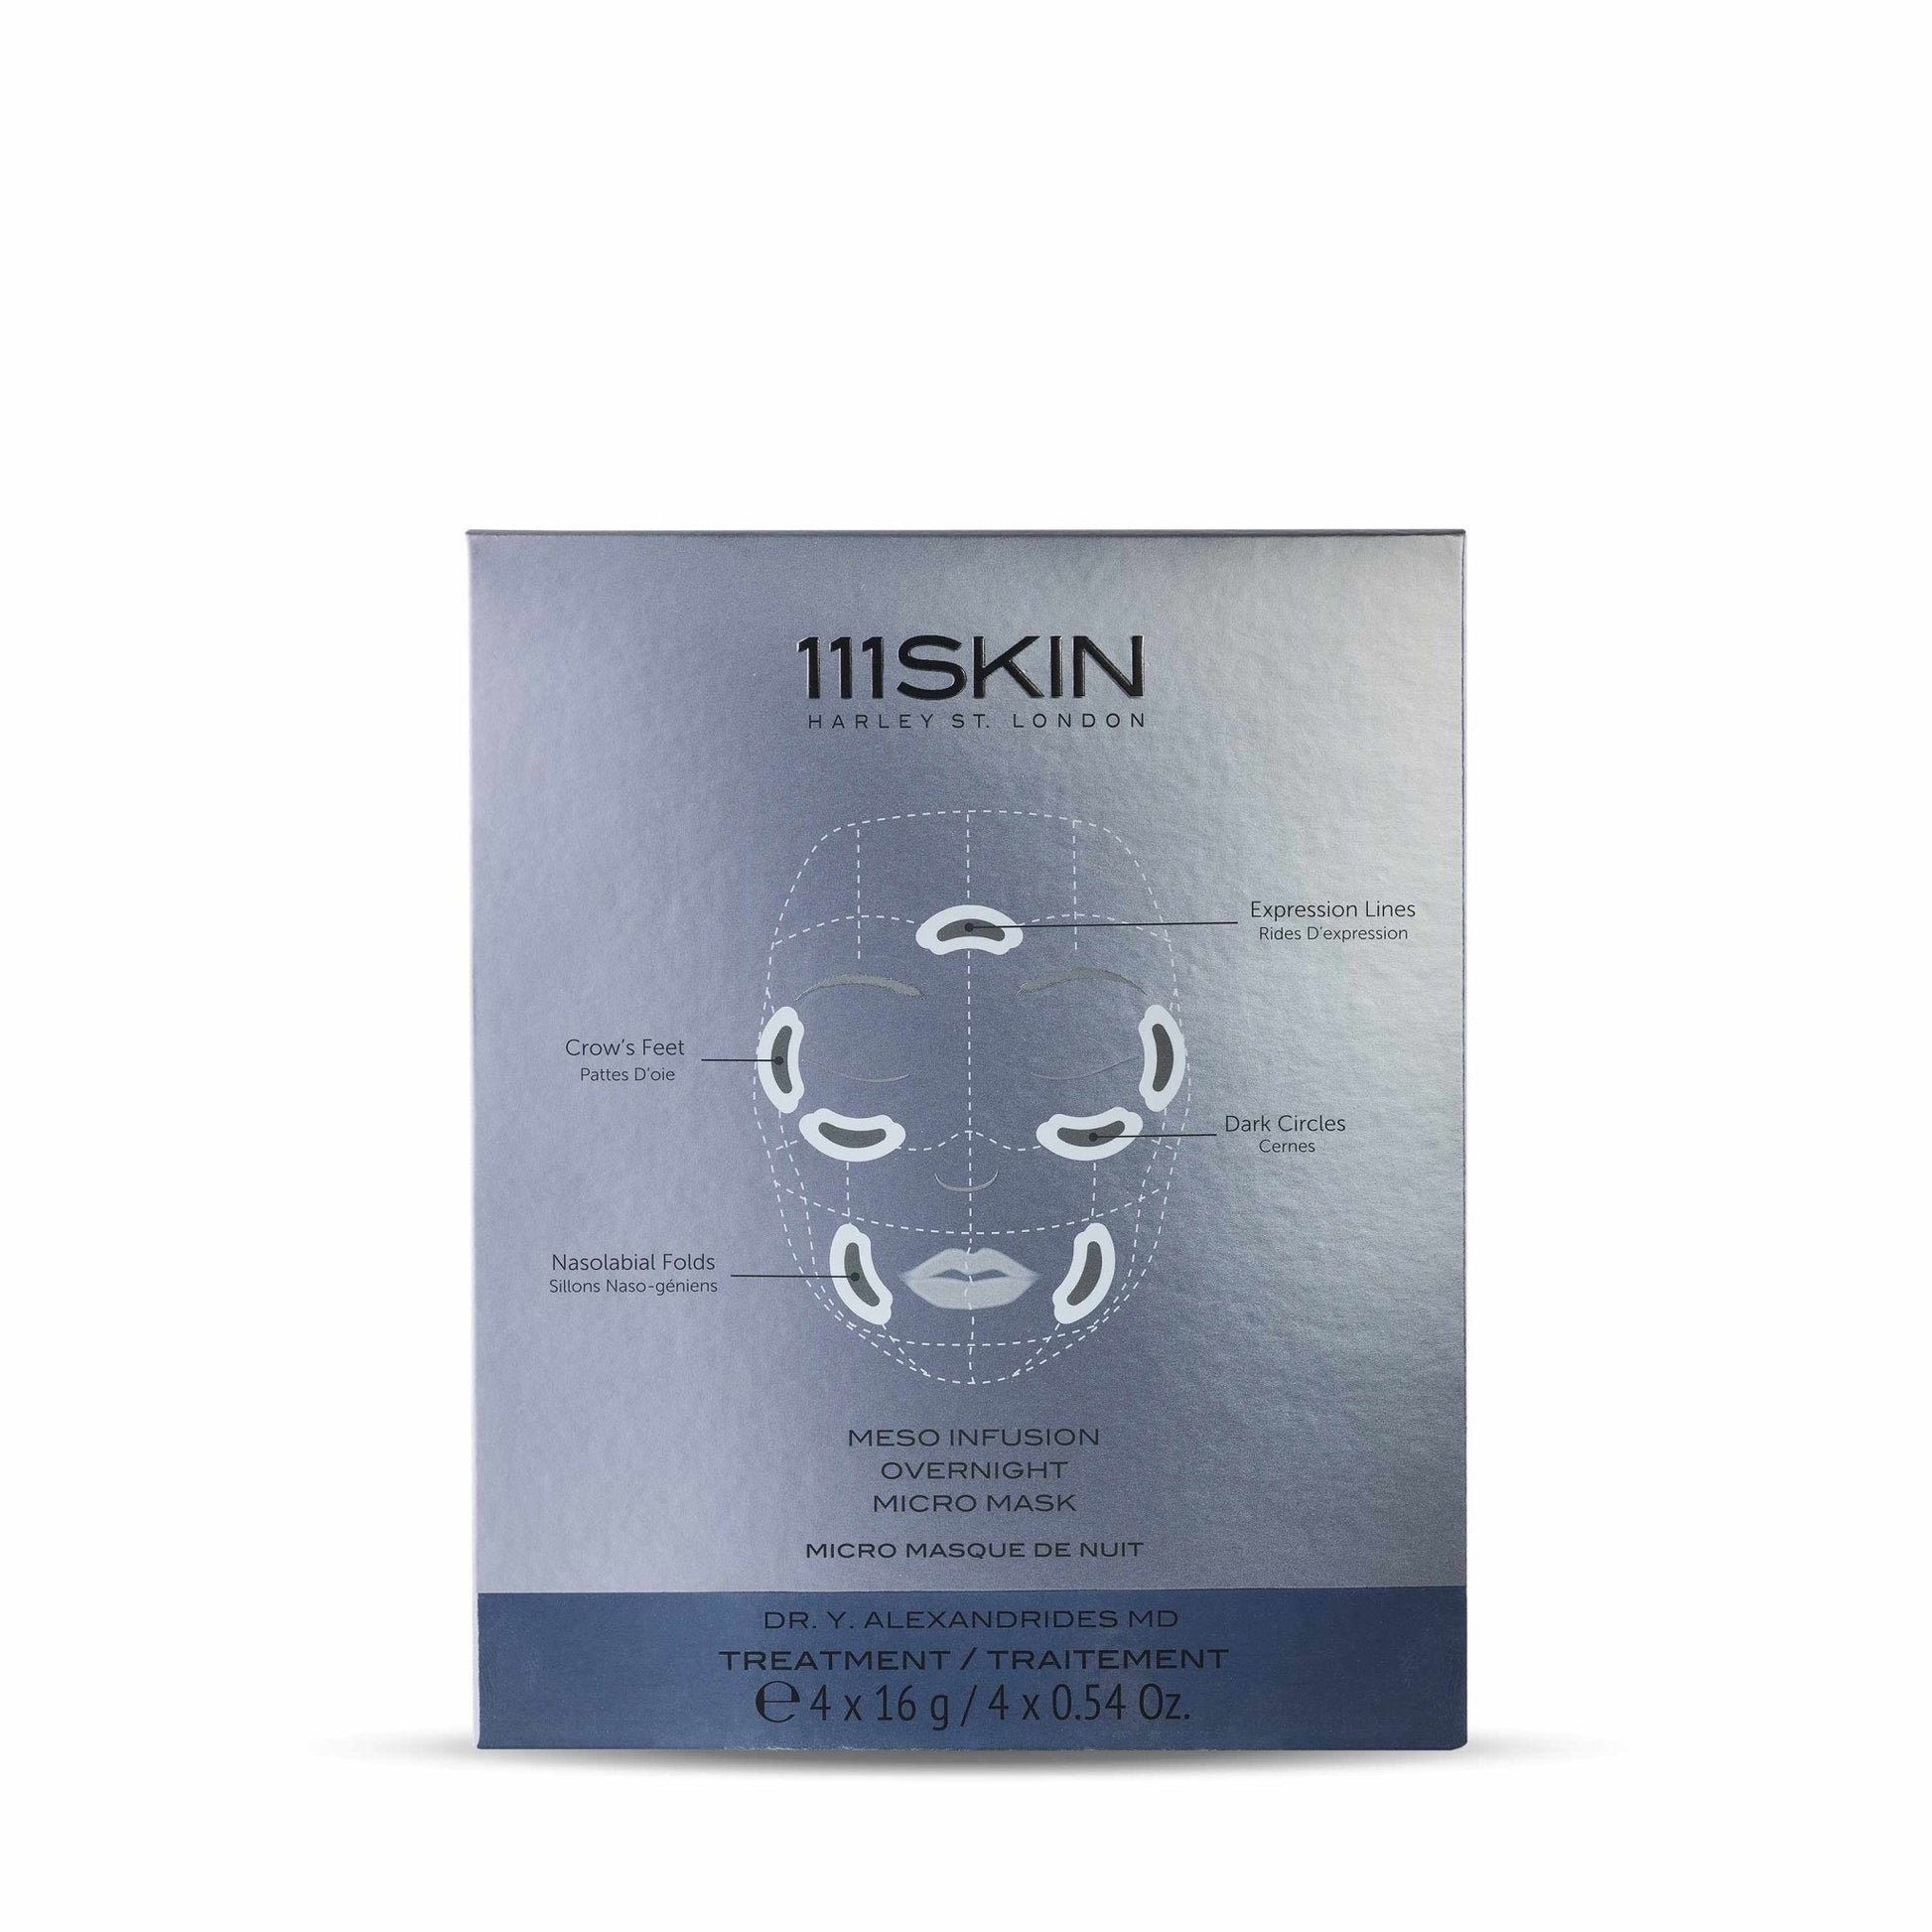 Meso Infusion Overnight Micro Mask - 111SKIN UK